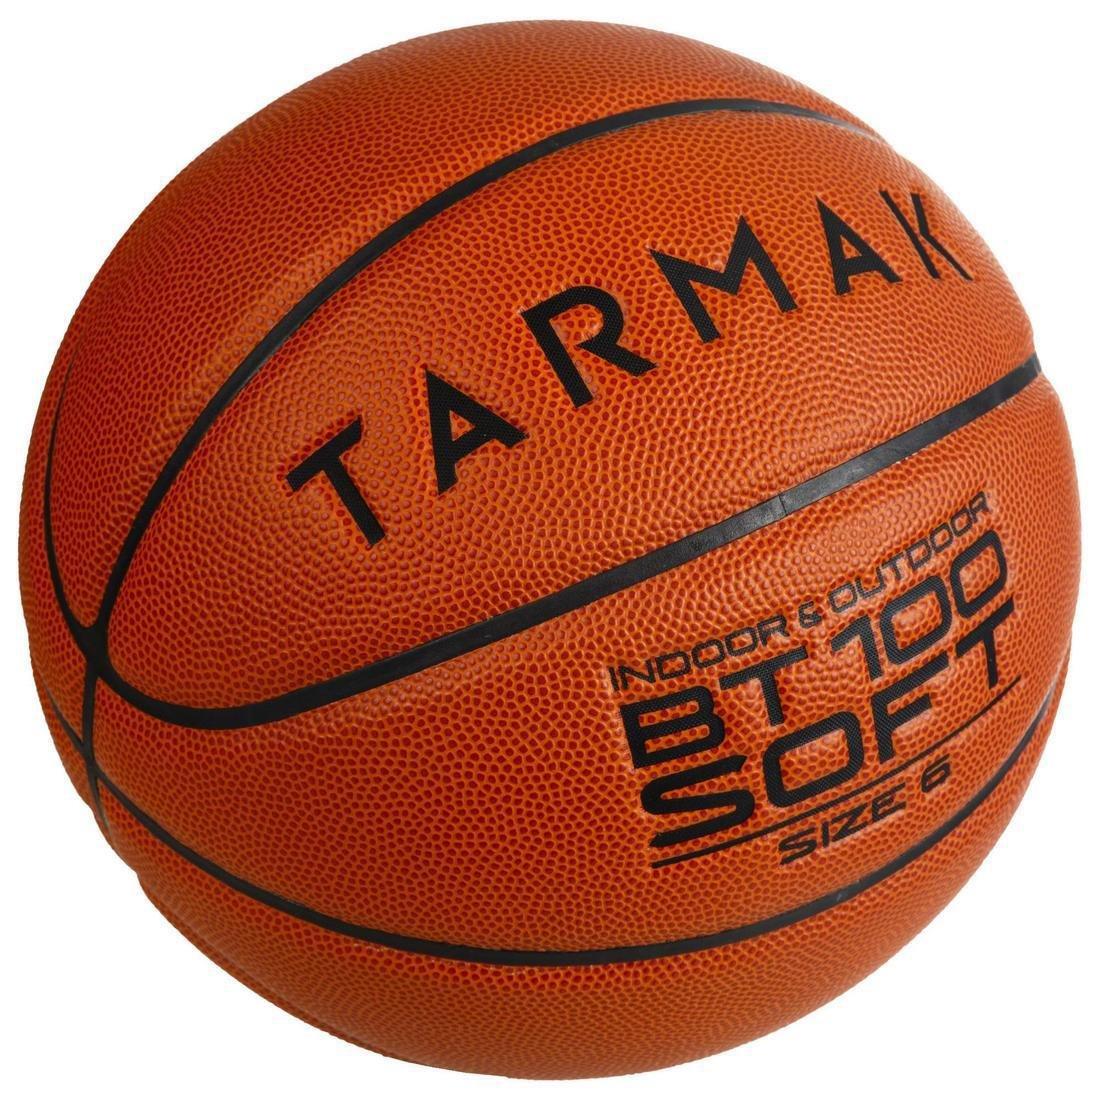 TARMAK - Kids'/Girls'/Boys'/Women's Basketball BT100 6, Blood Orange